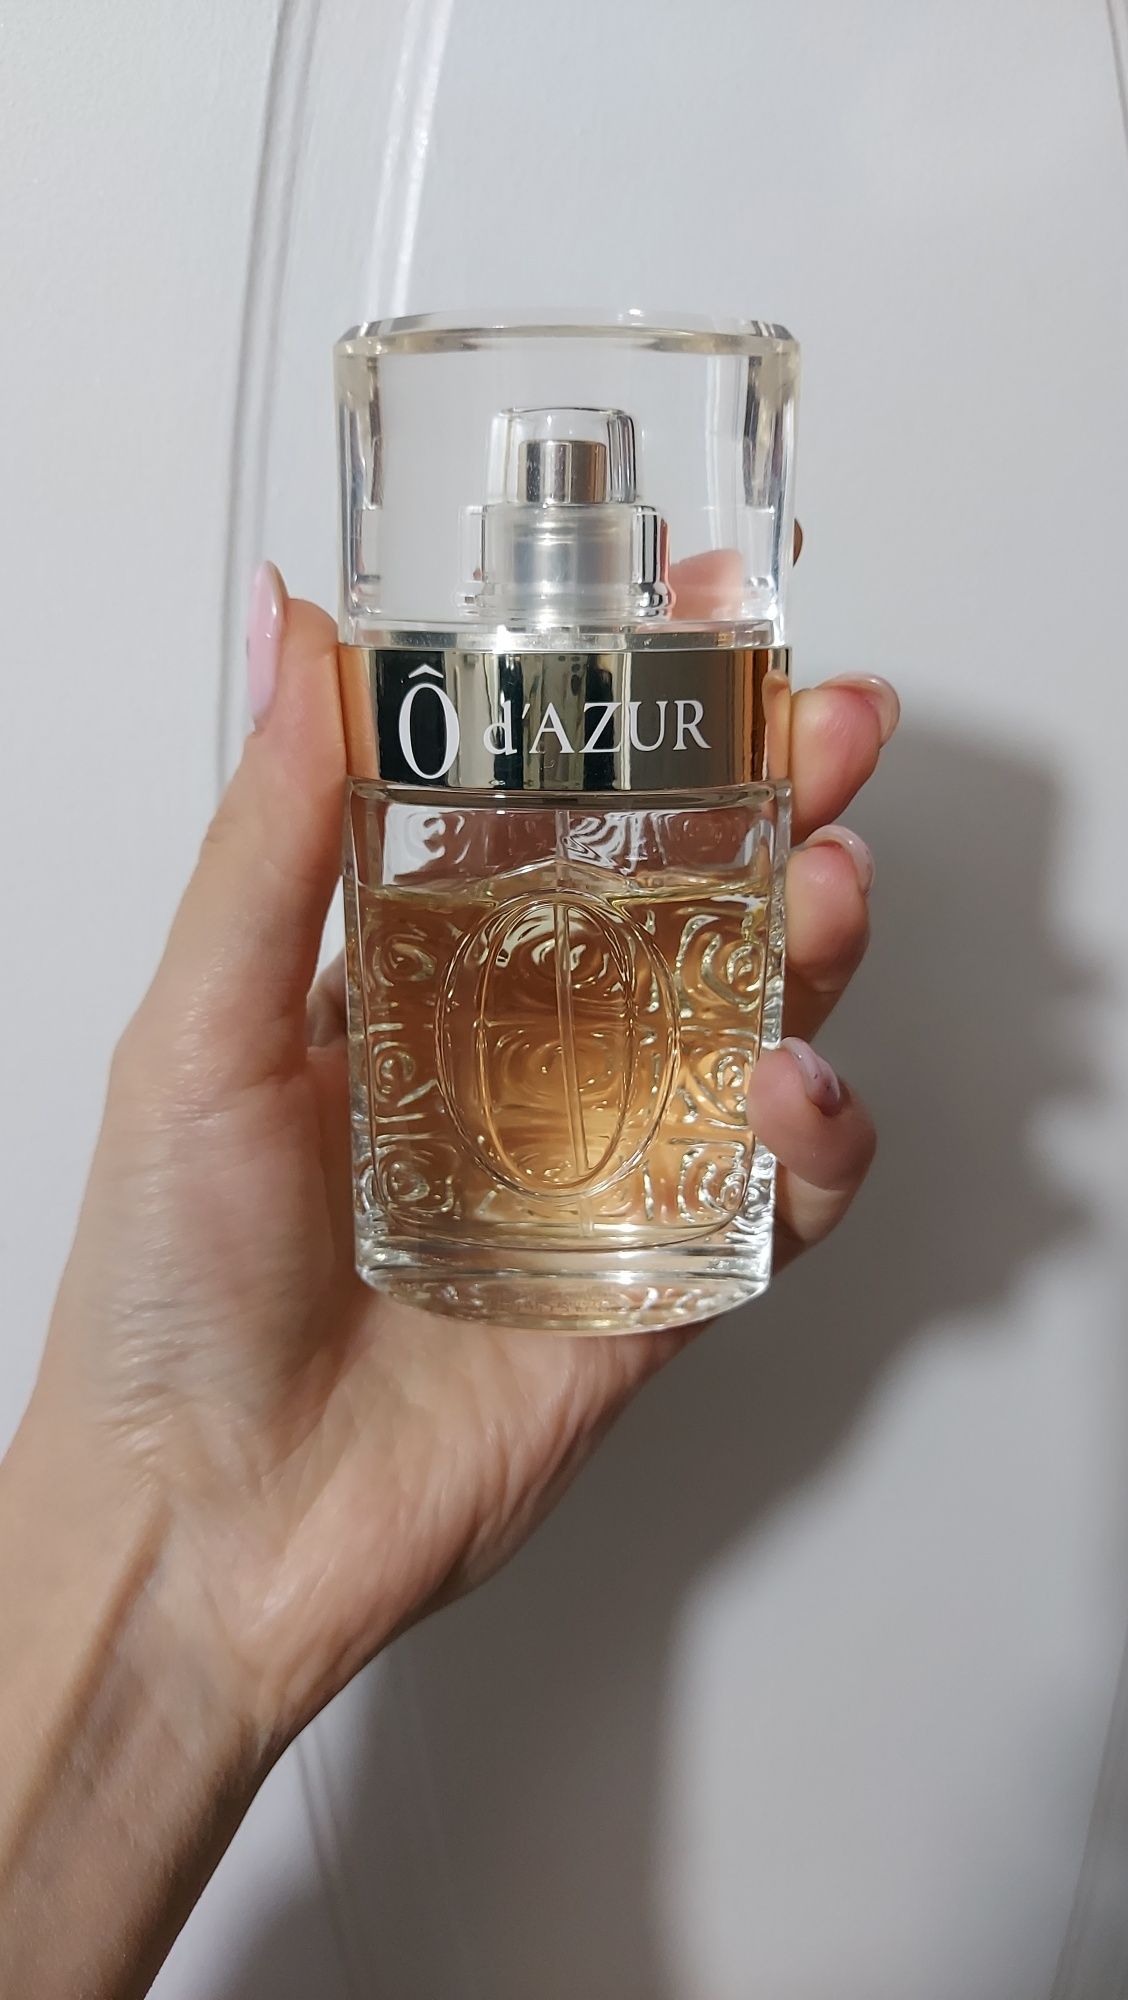 O d'Azur Lancôme парфюм для женщин